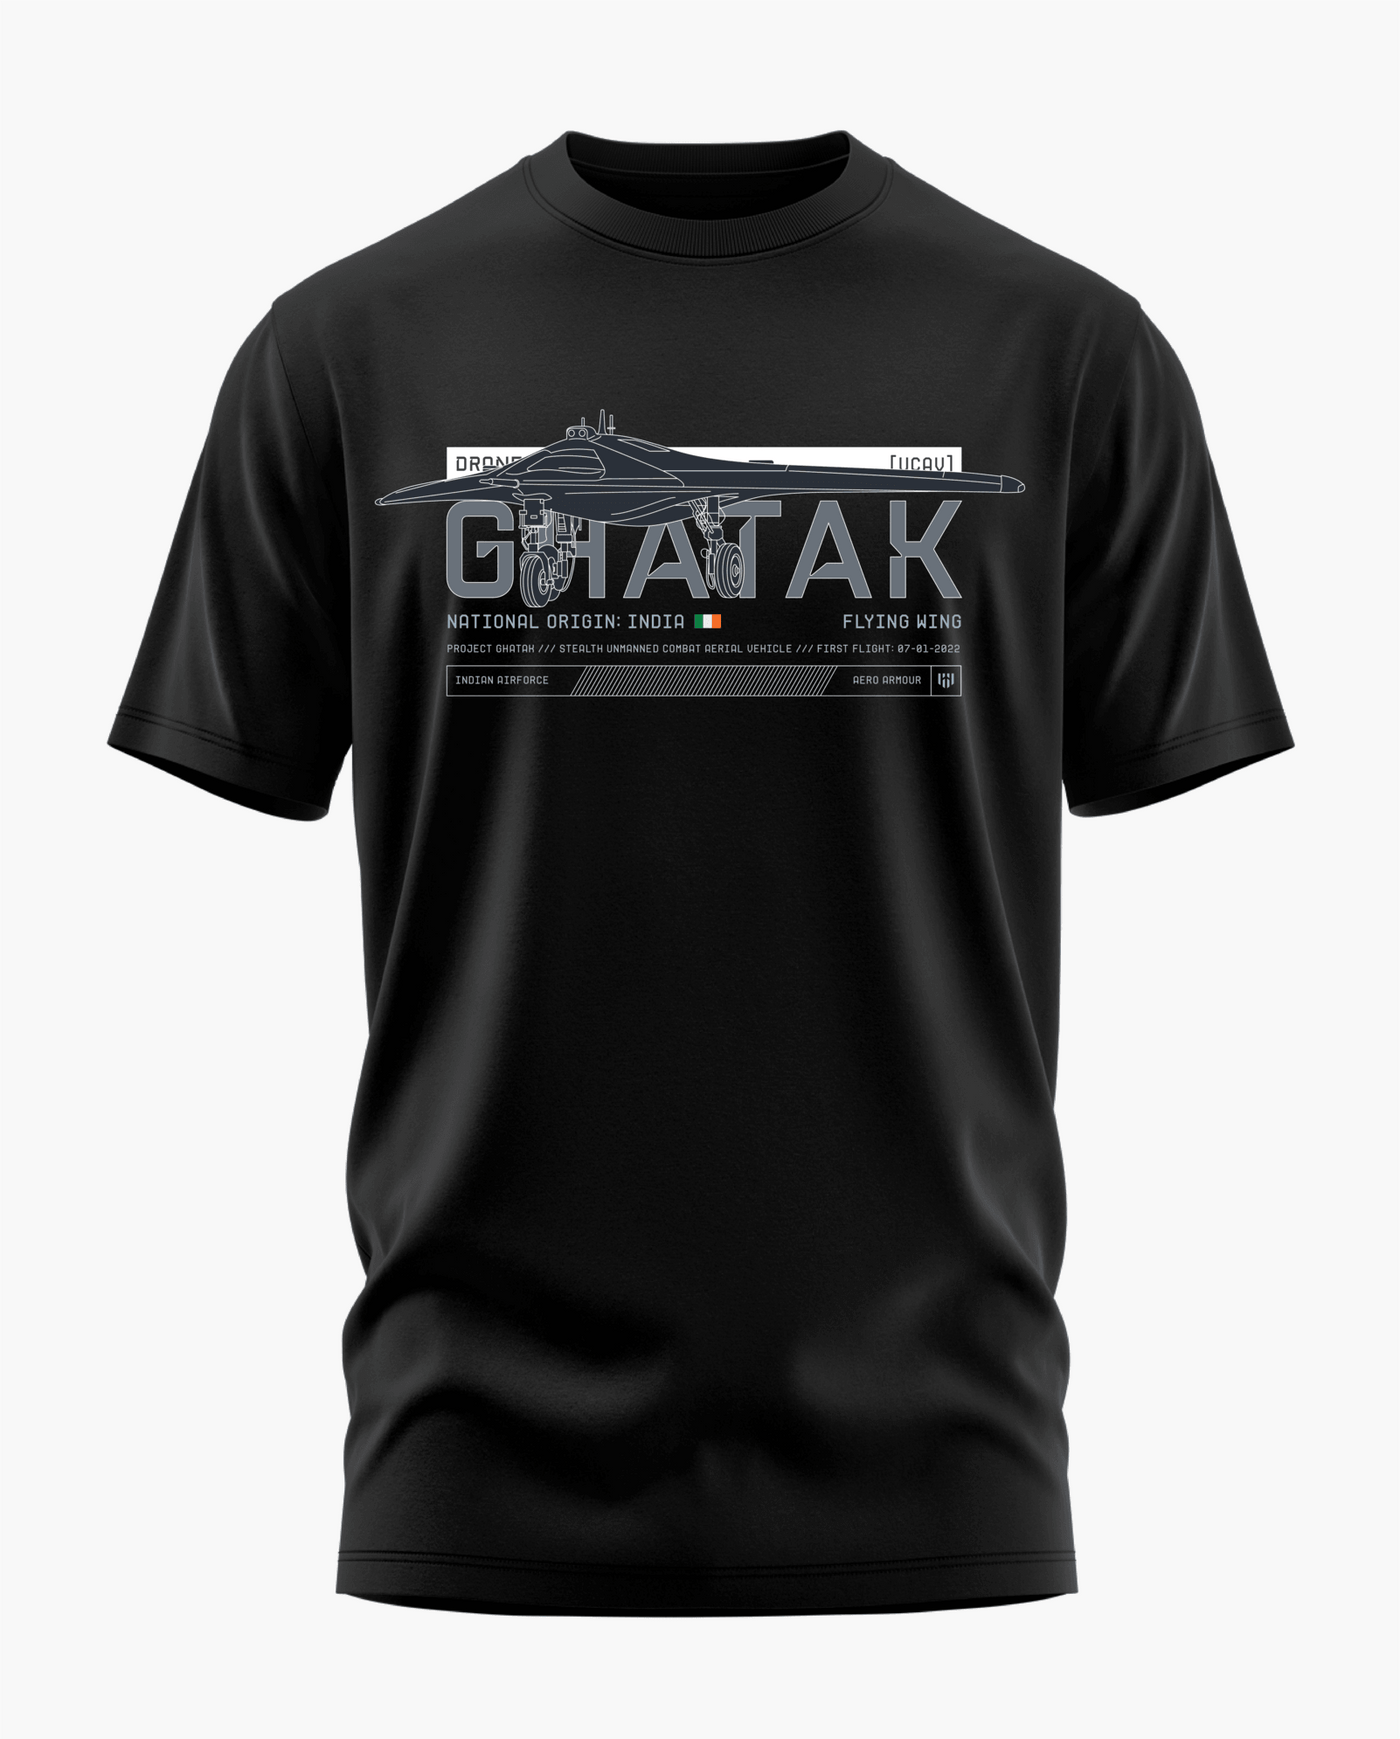 DRDO Ghatak T-Shirt - Aero Armour